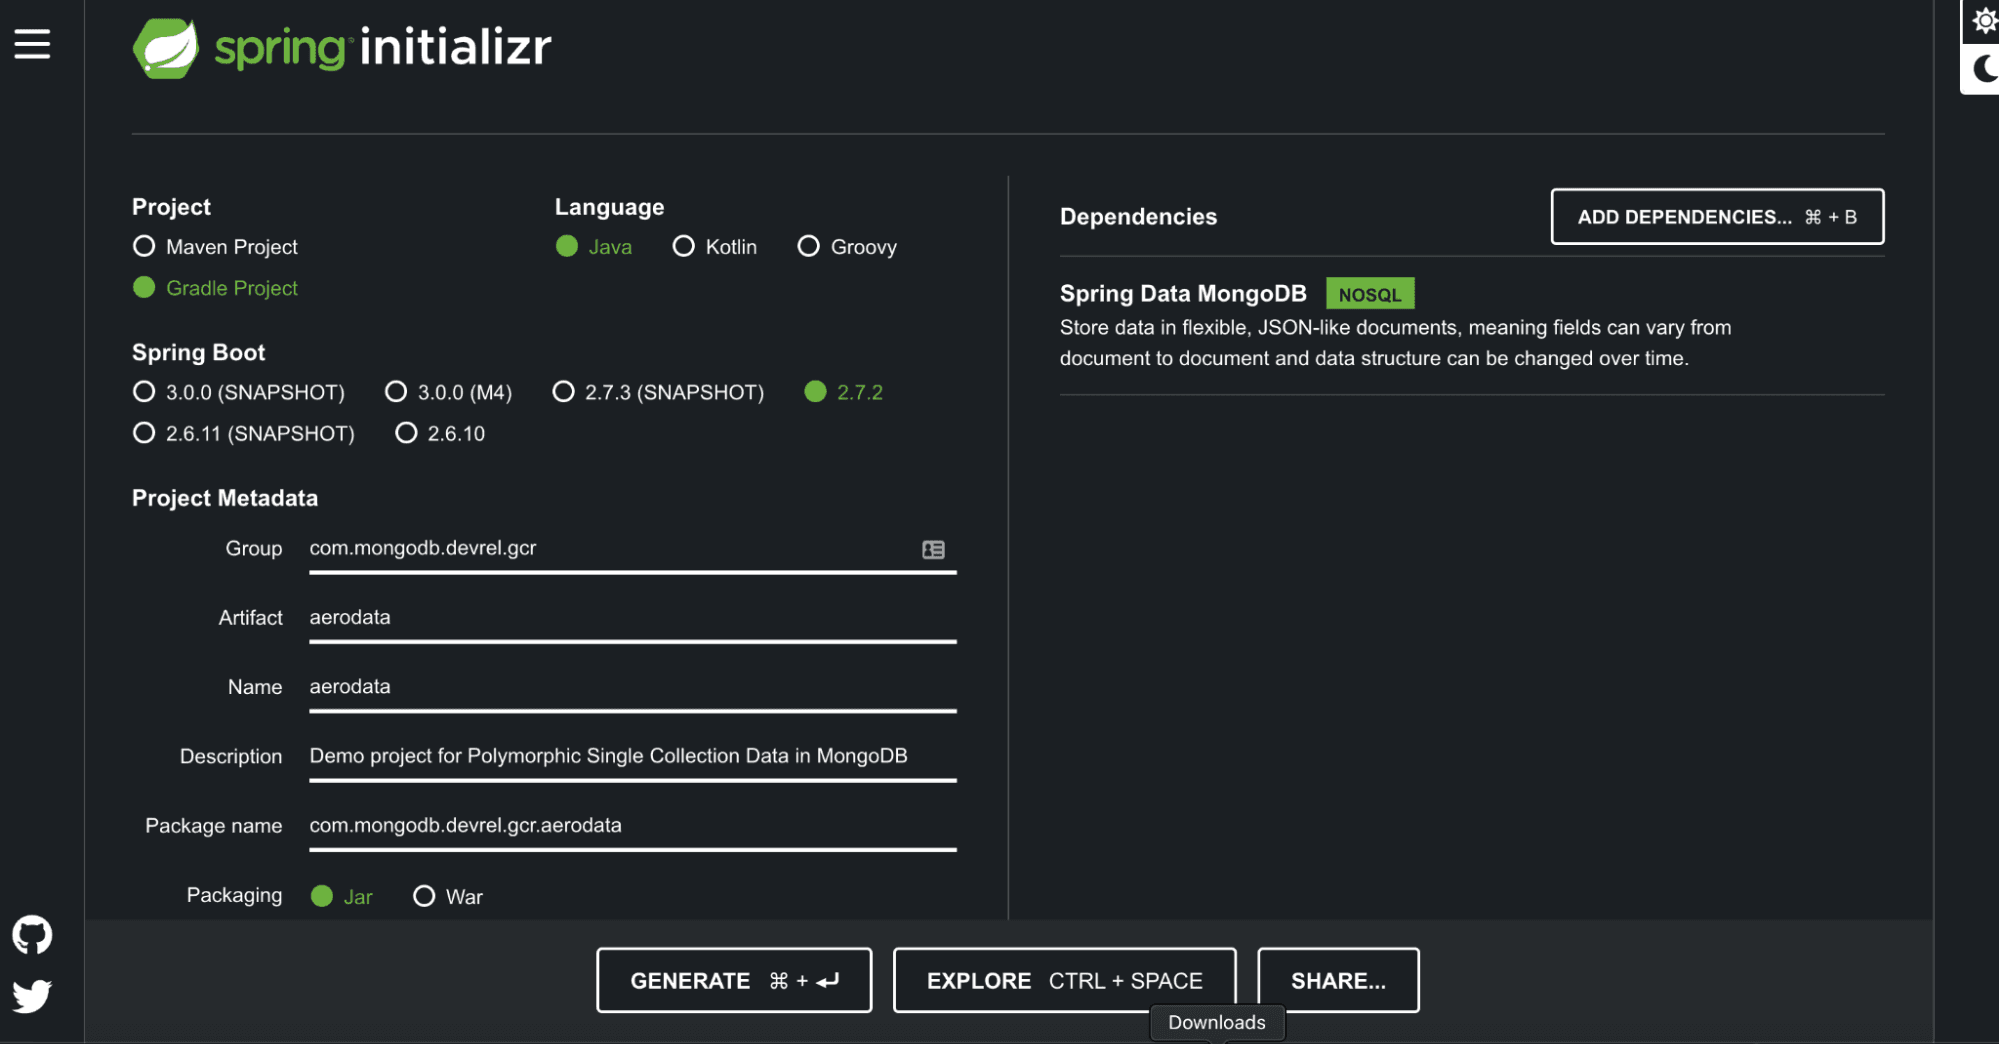 Screenshot of the Spring Initializr website